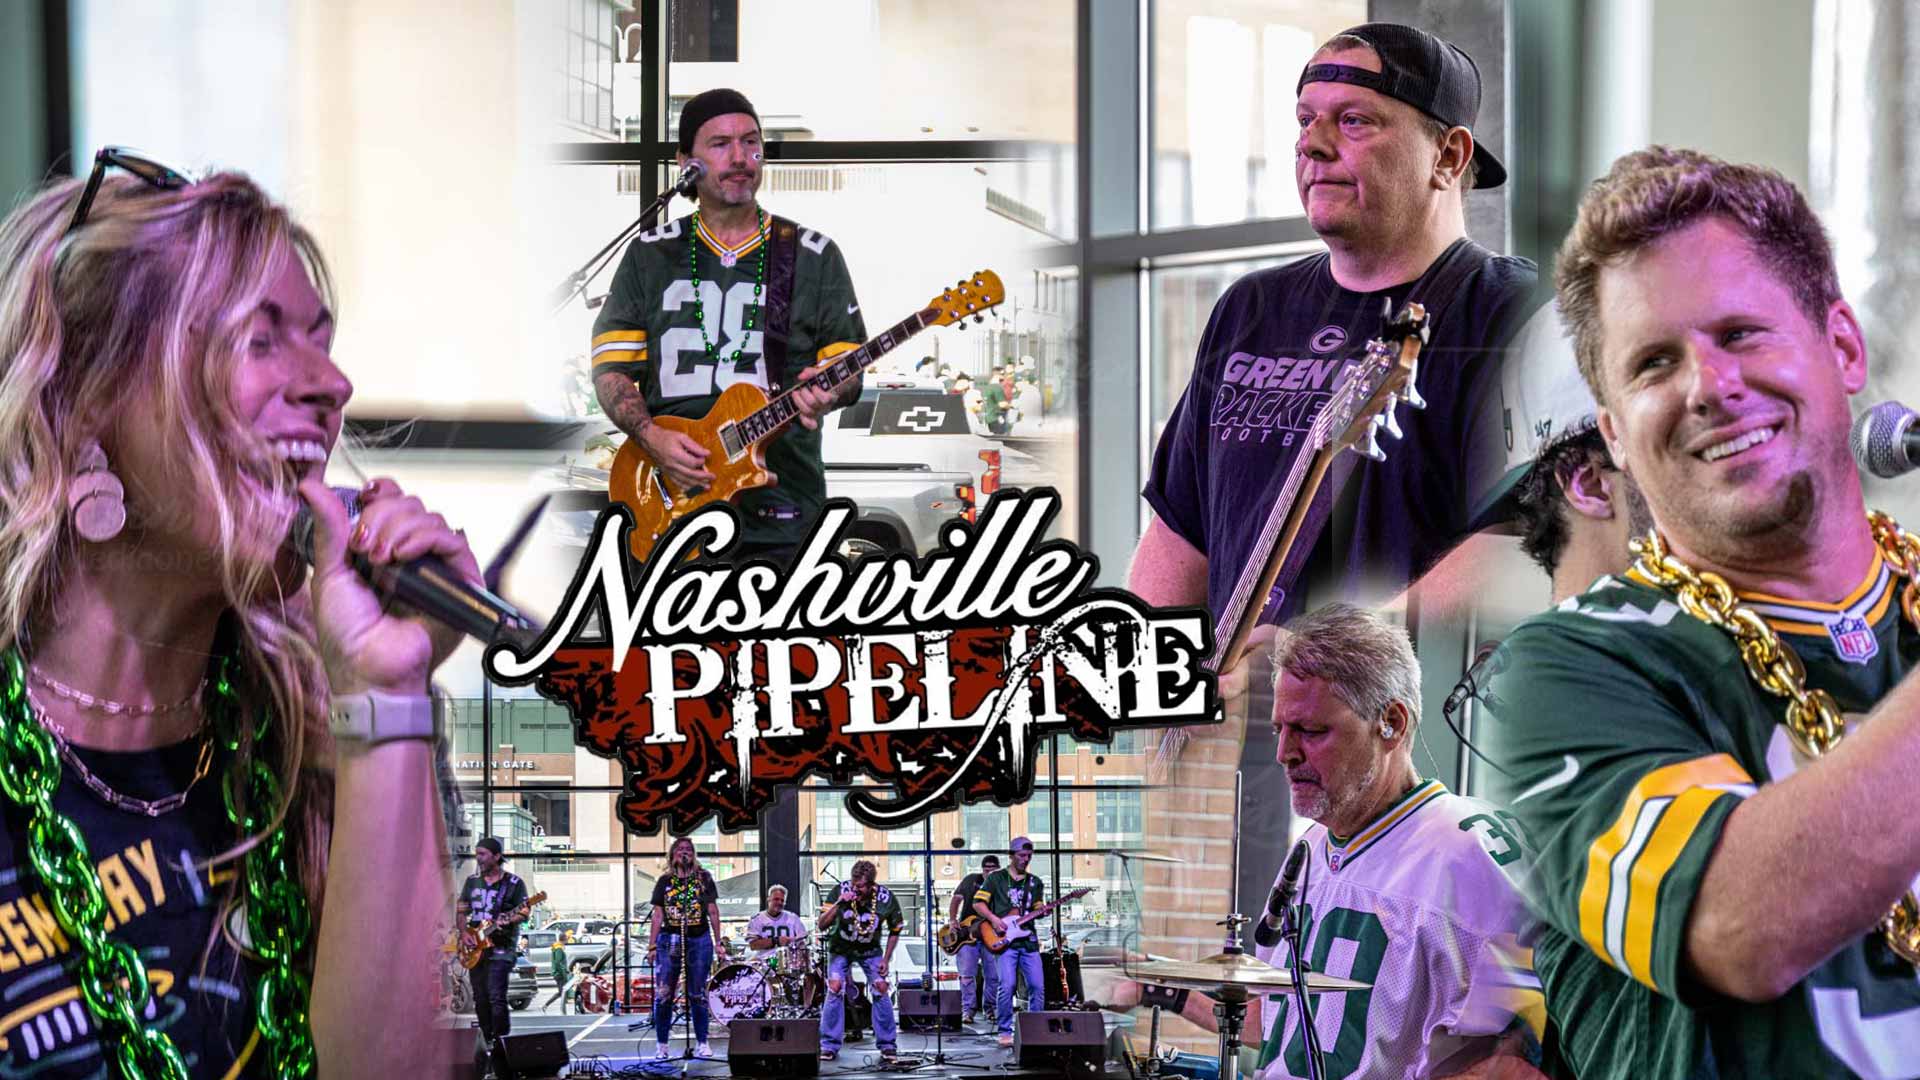 Nashville Pipeline Rocks the Johnsonville Tailgate Village at Lambeau Field